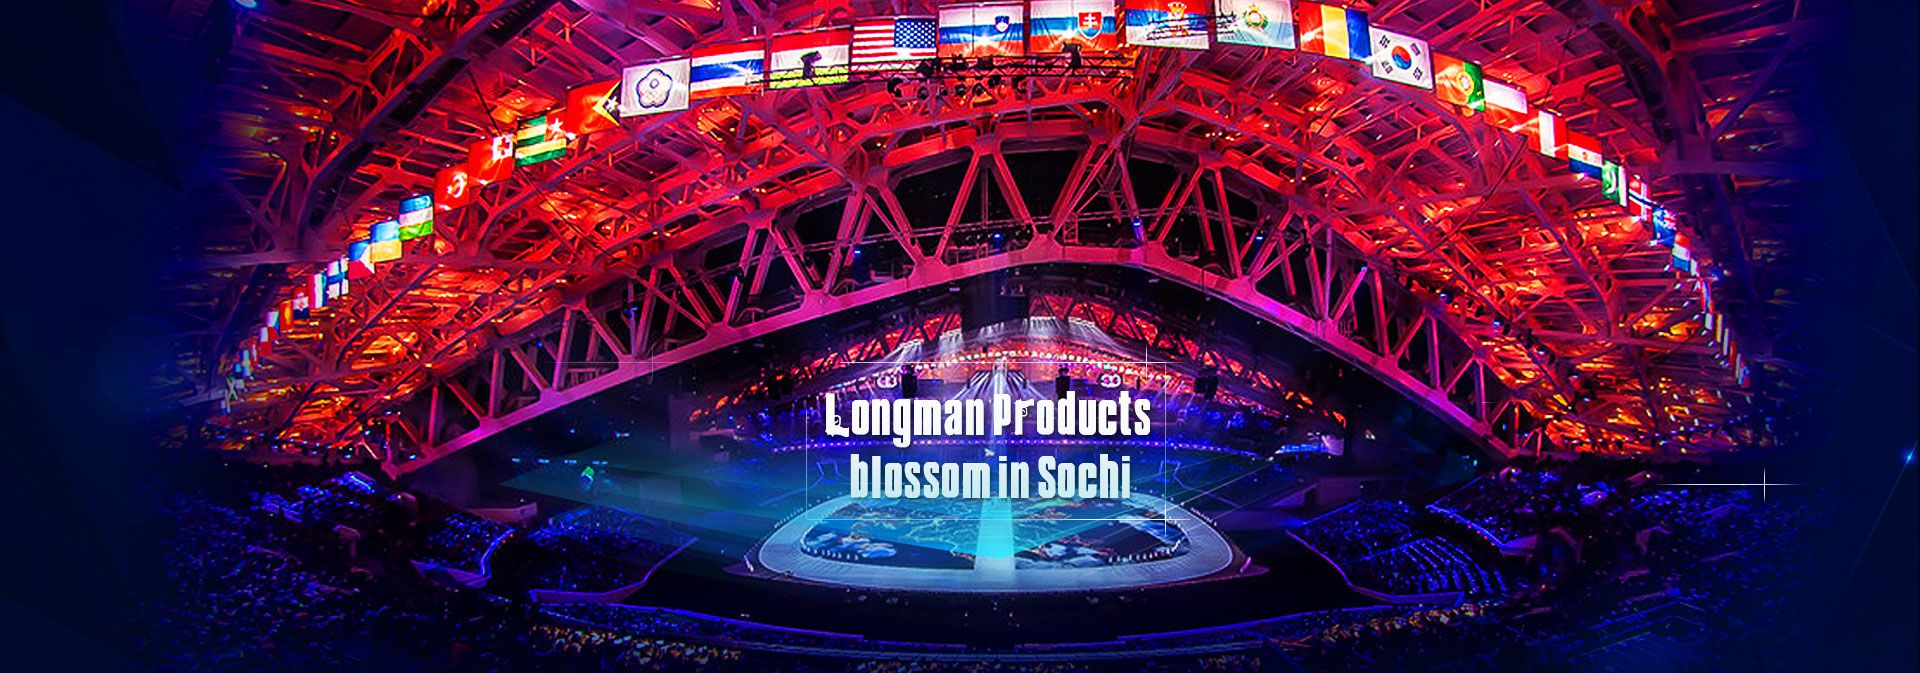 Longman lighting products blossom in Sochi